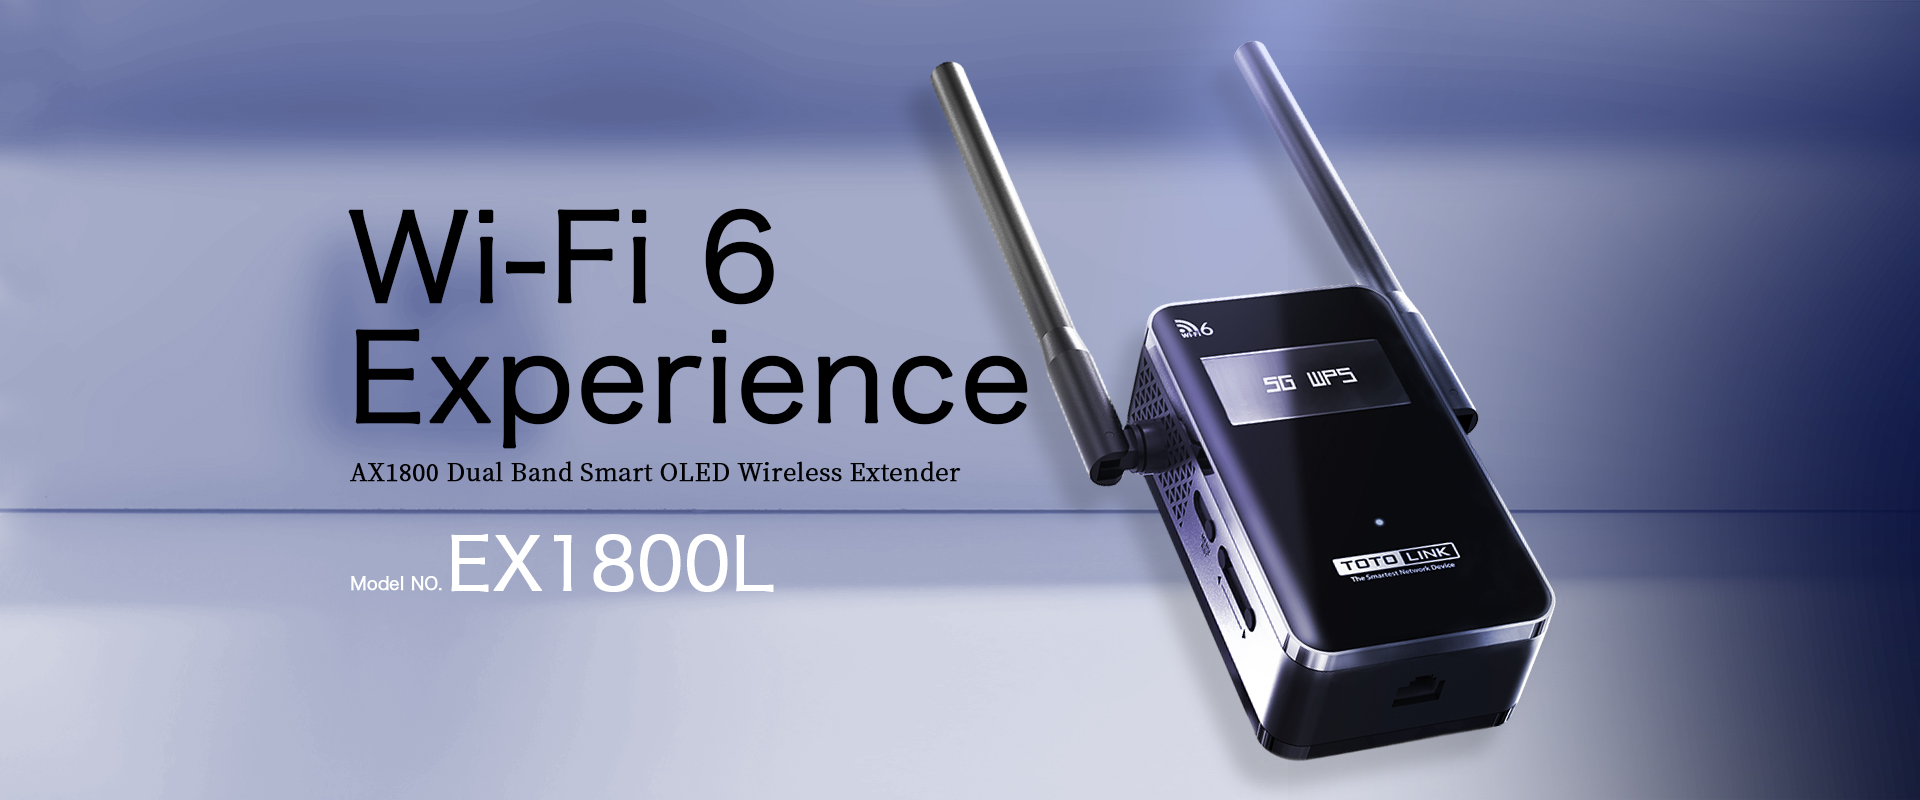  EX1800L-AX1800-Dual-Band-Smart-OLED-Wireless-Extender 